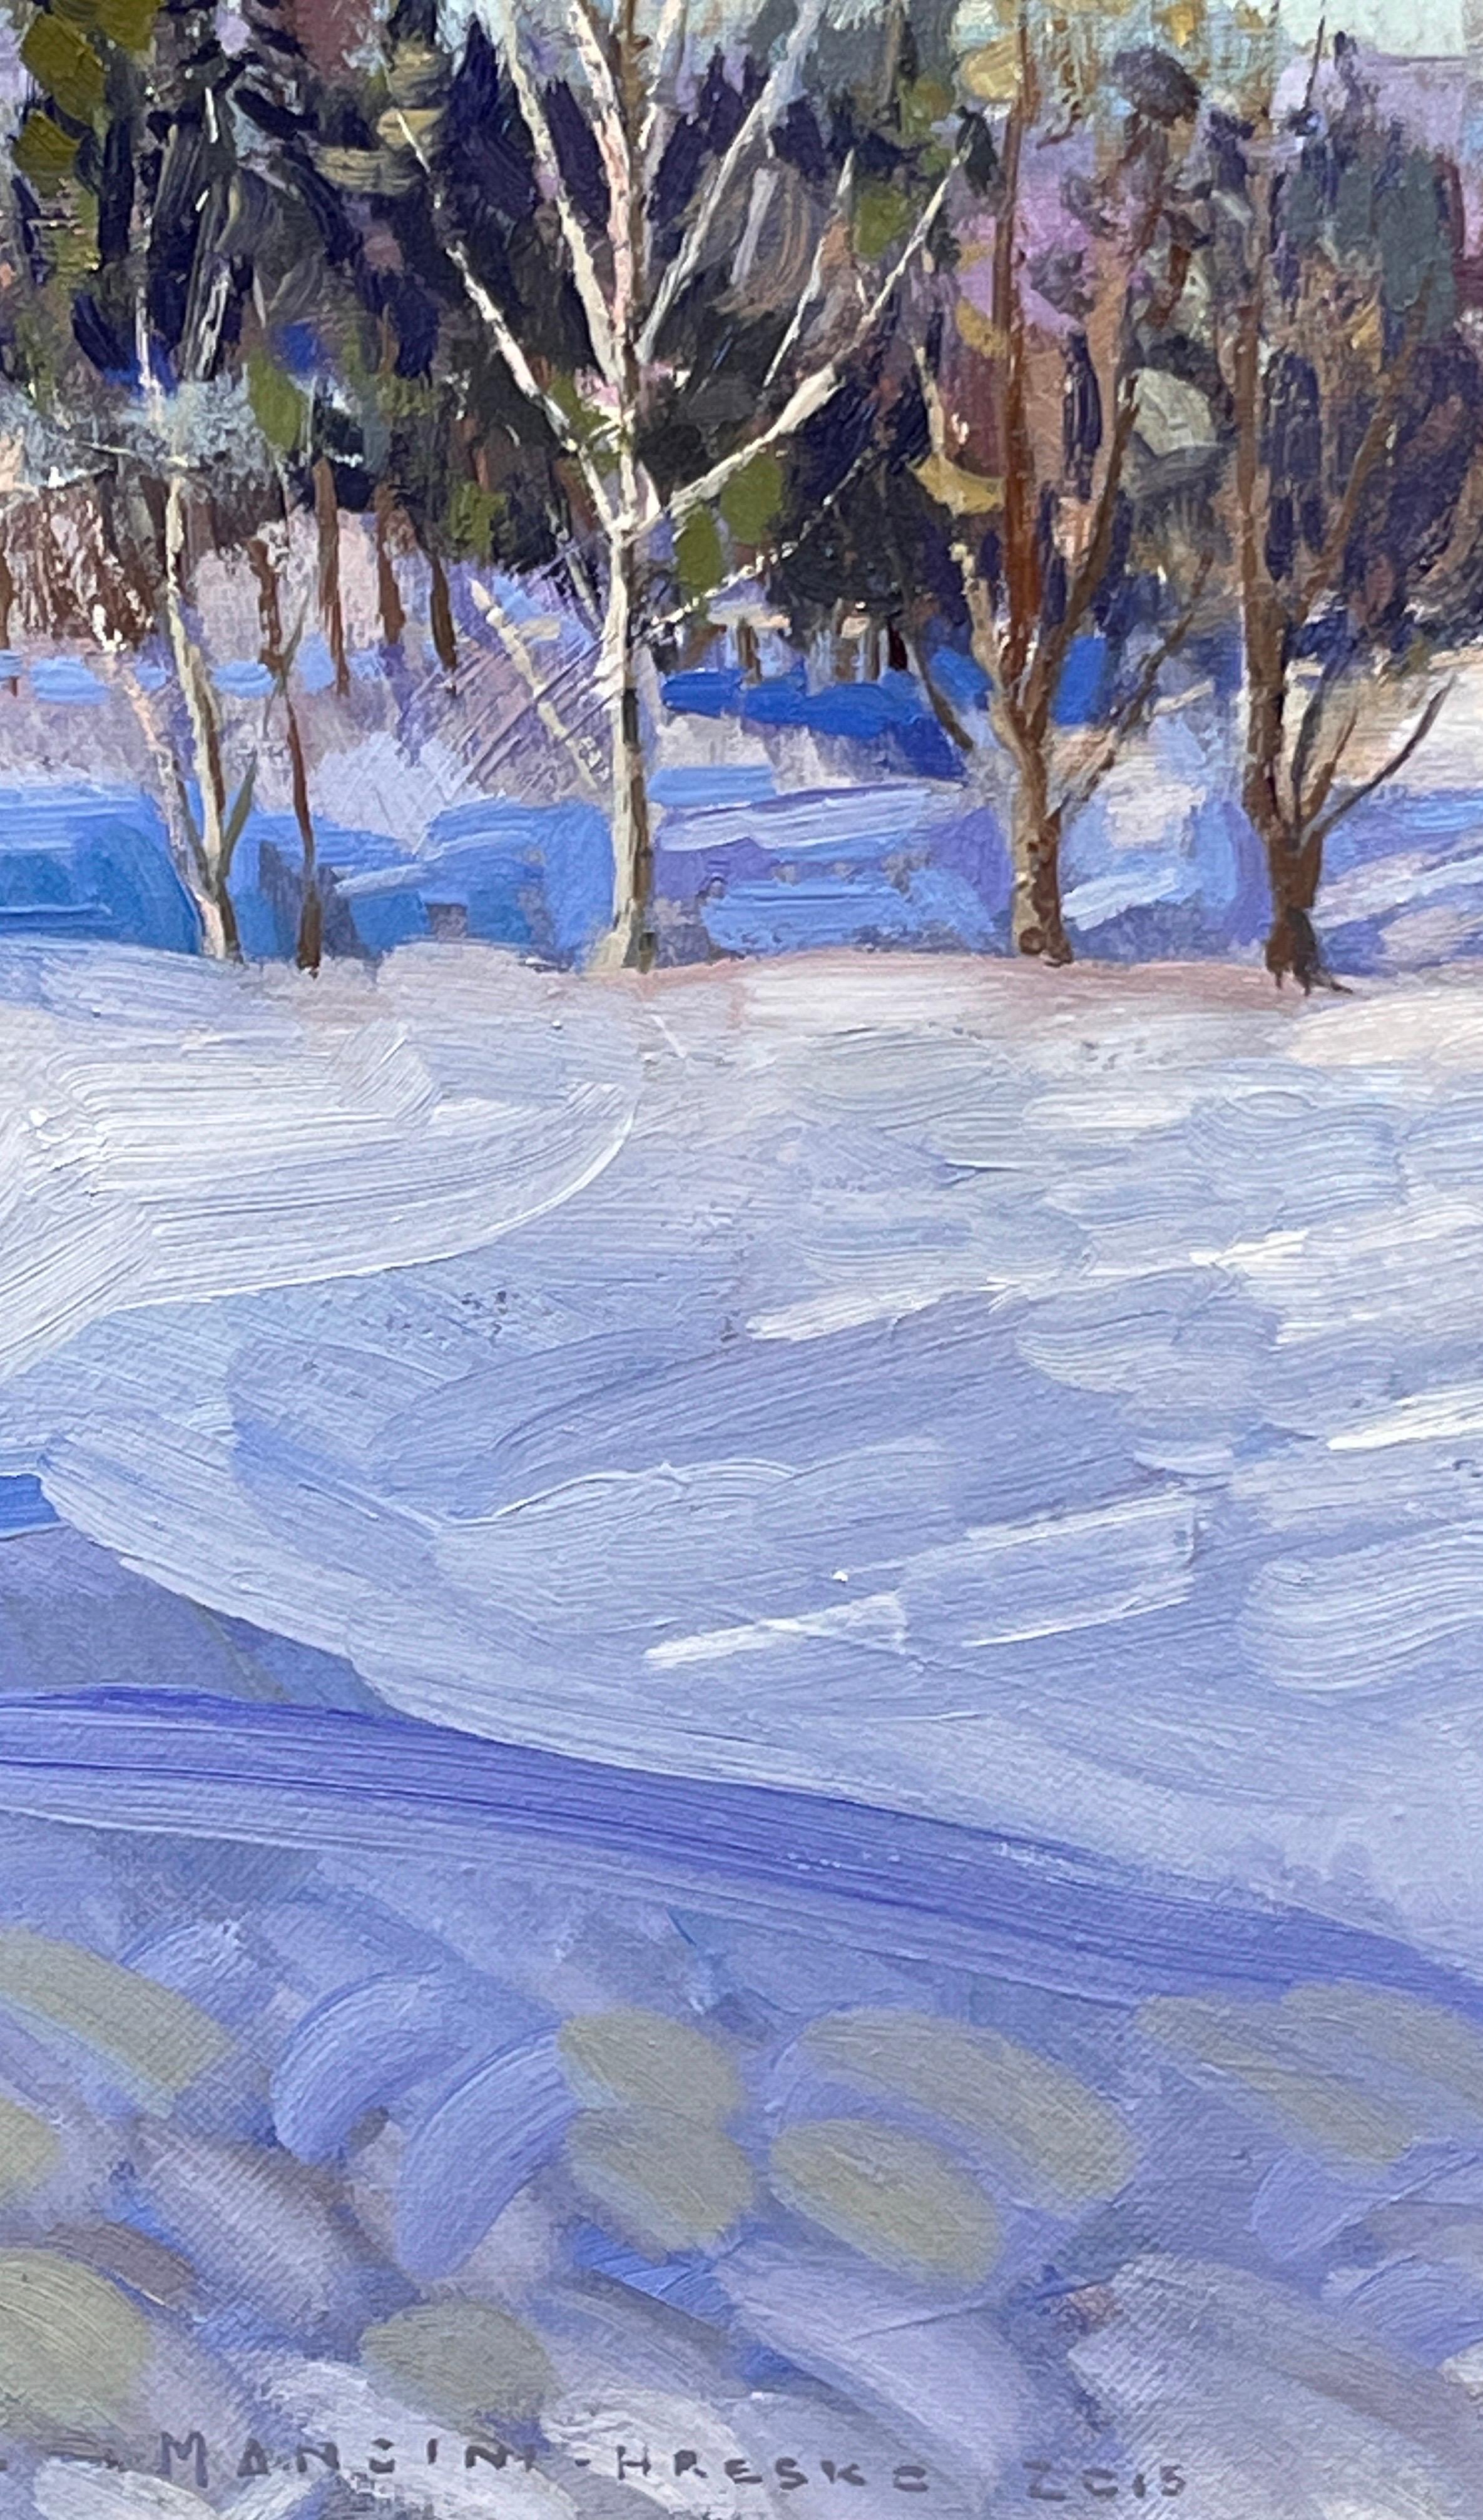 Winter Rhythms - Painting by Leo Mancini-Hresko